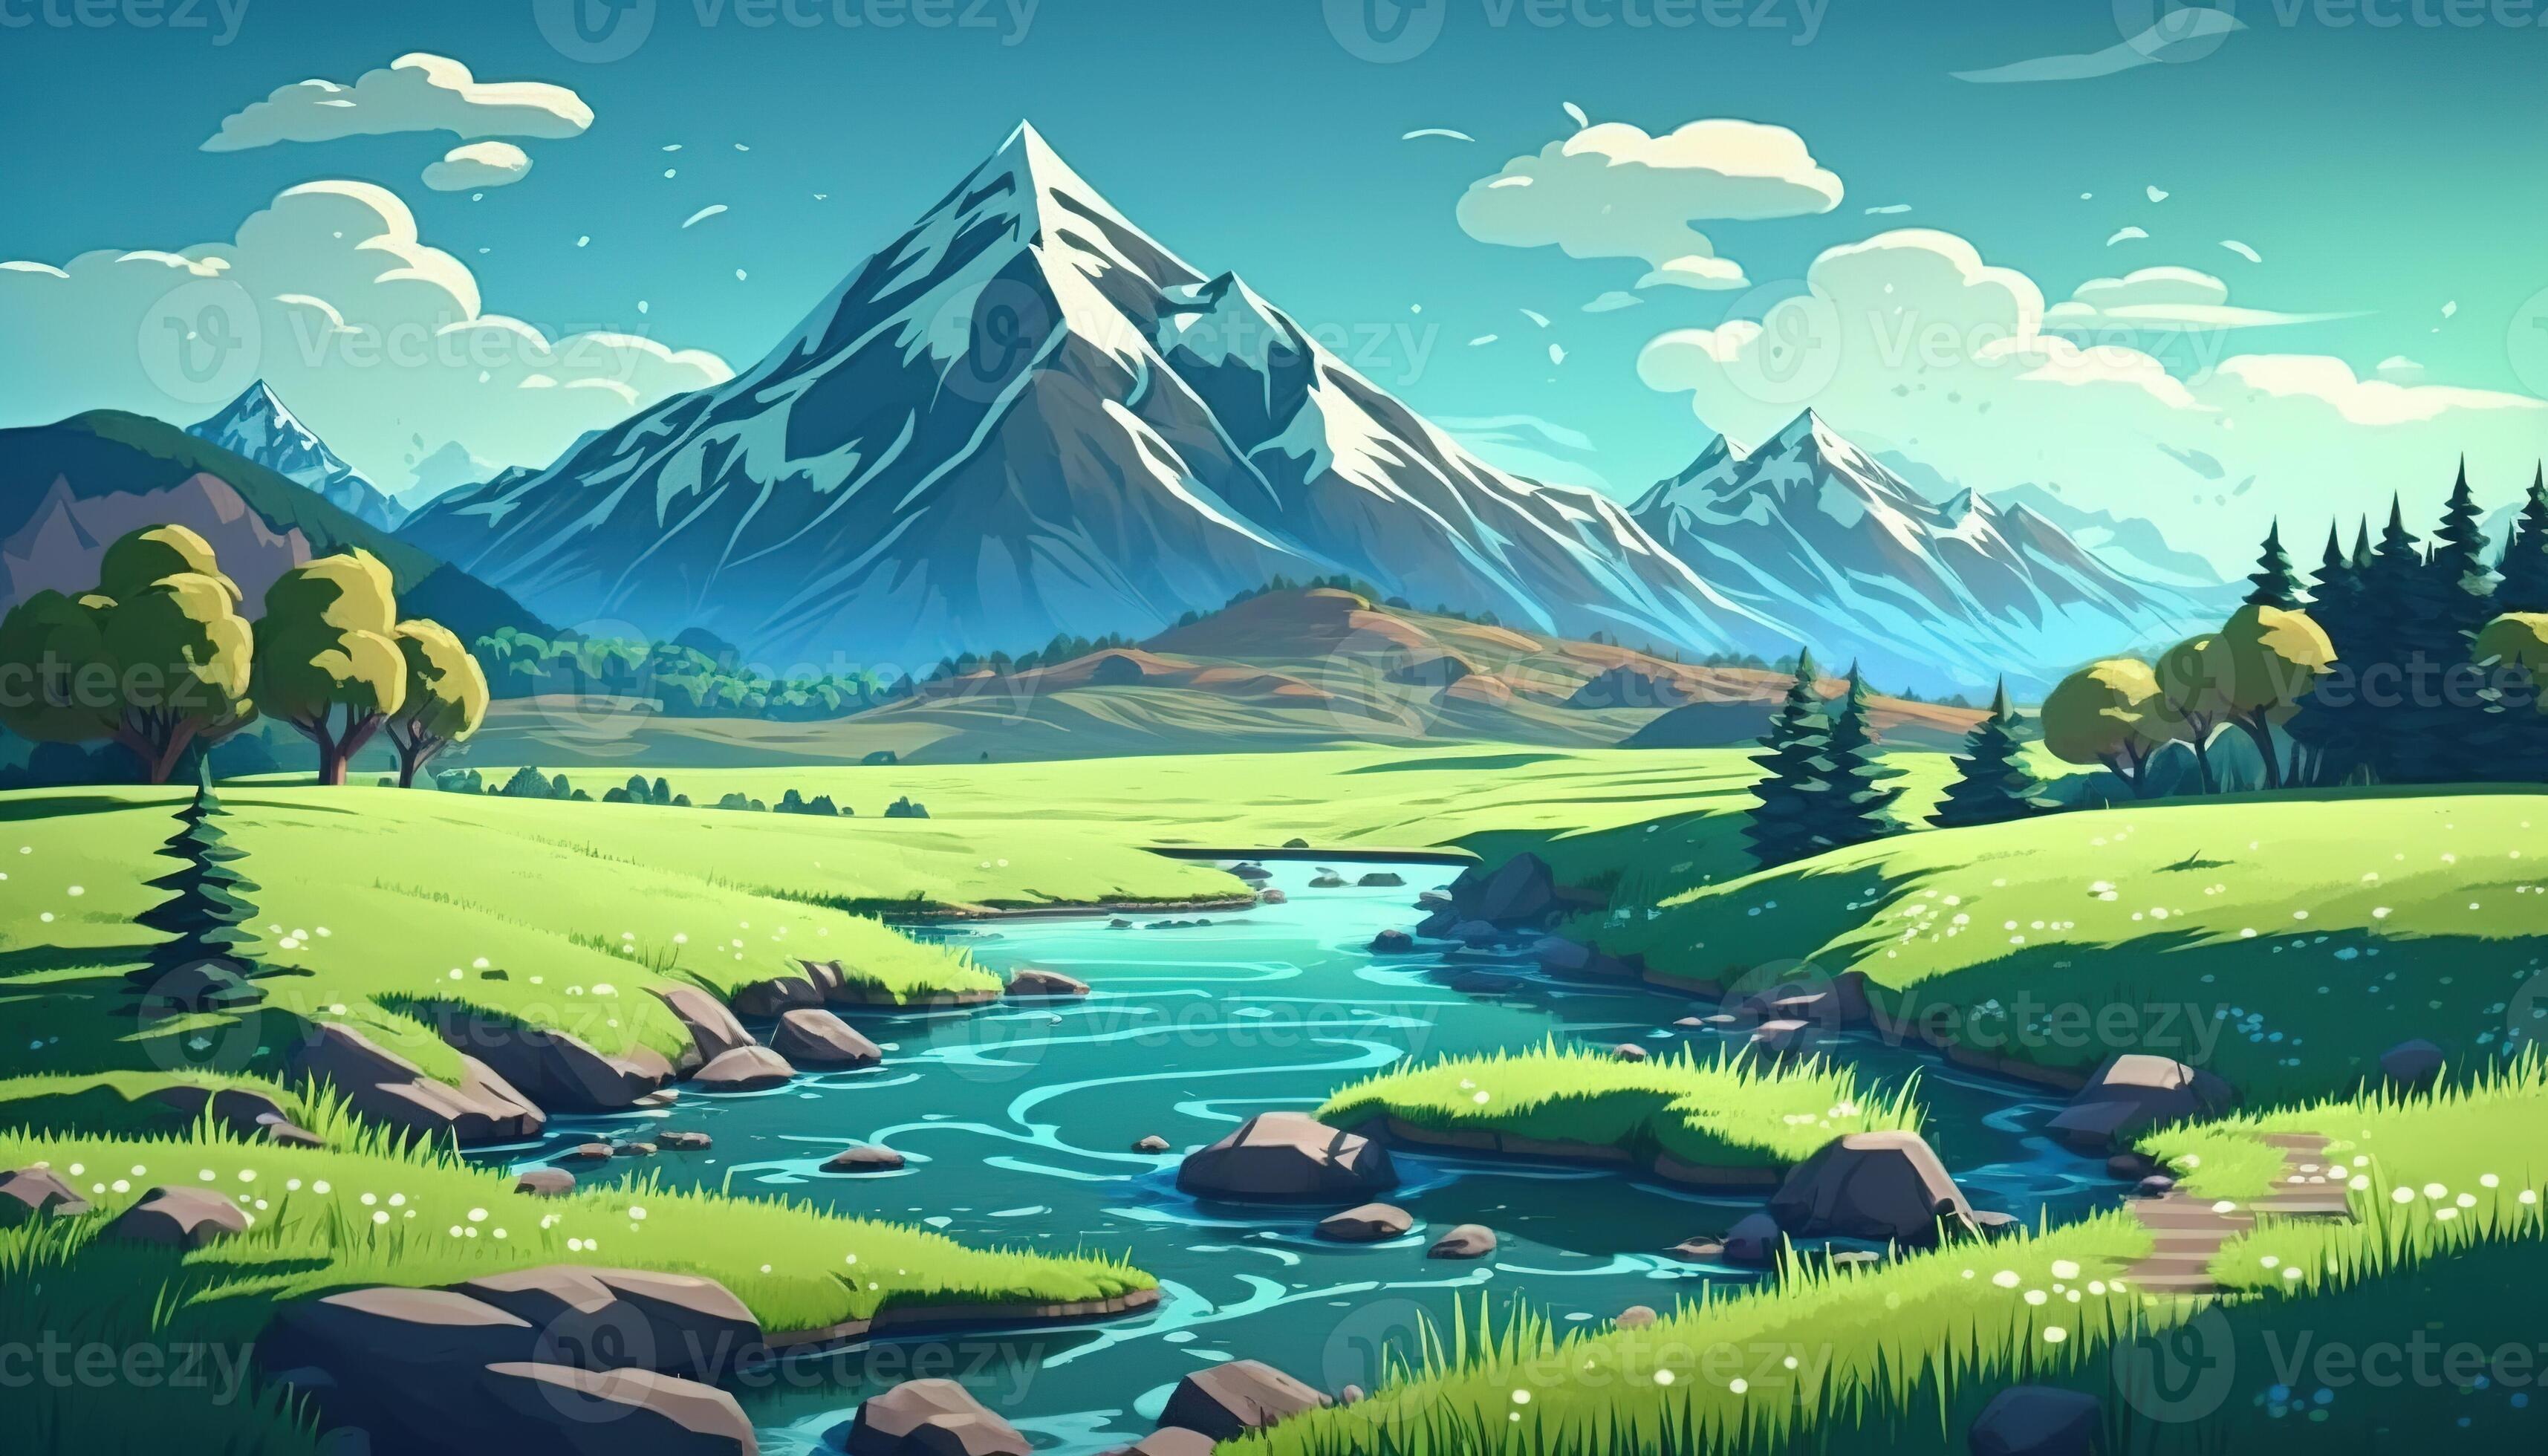 5,841 Mountain Anime Images, Stock Photos & Vectors | Shutterstock